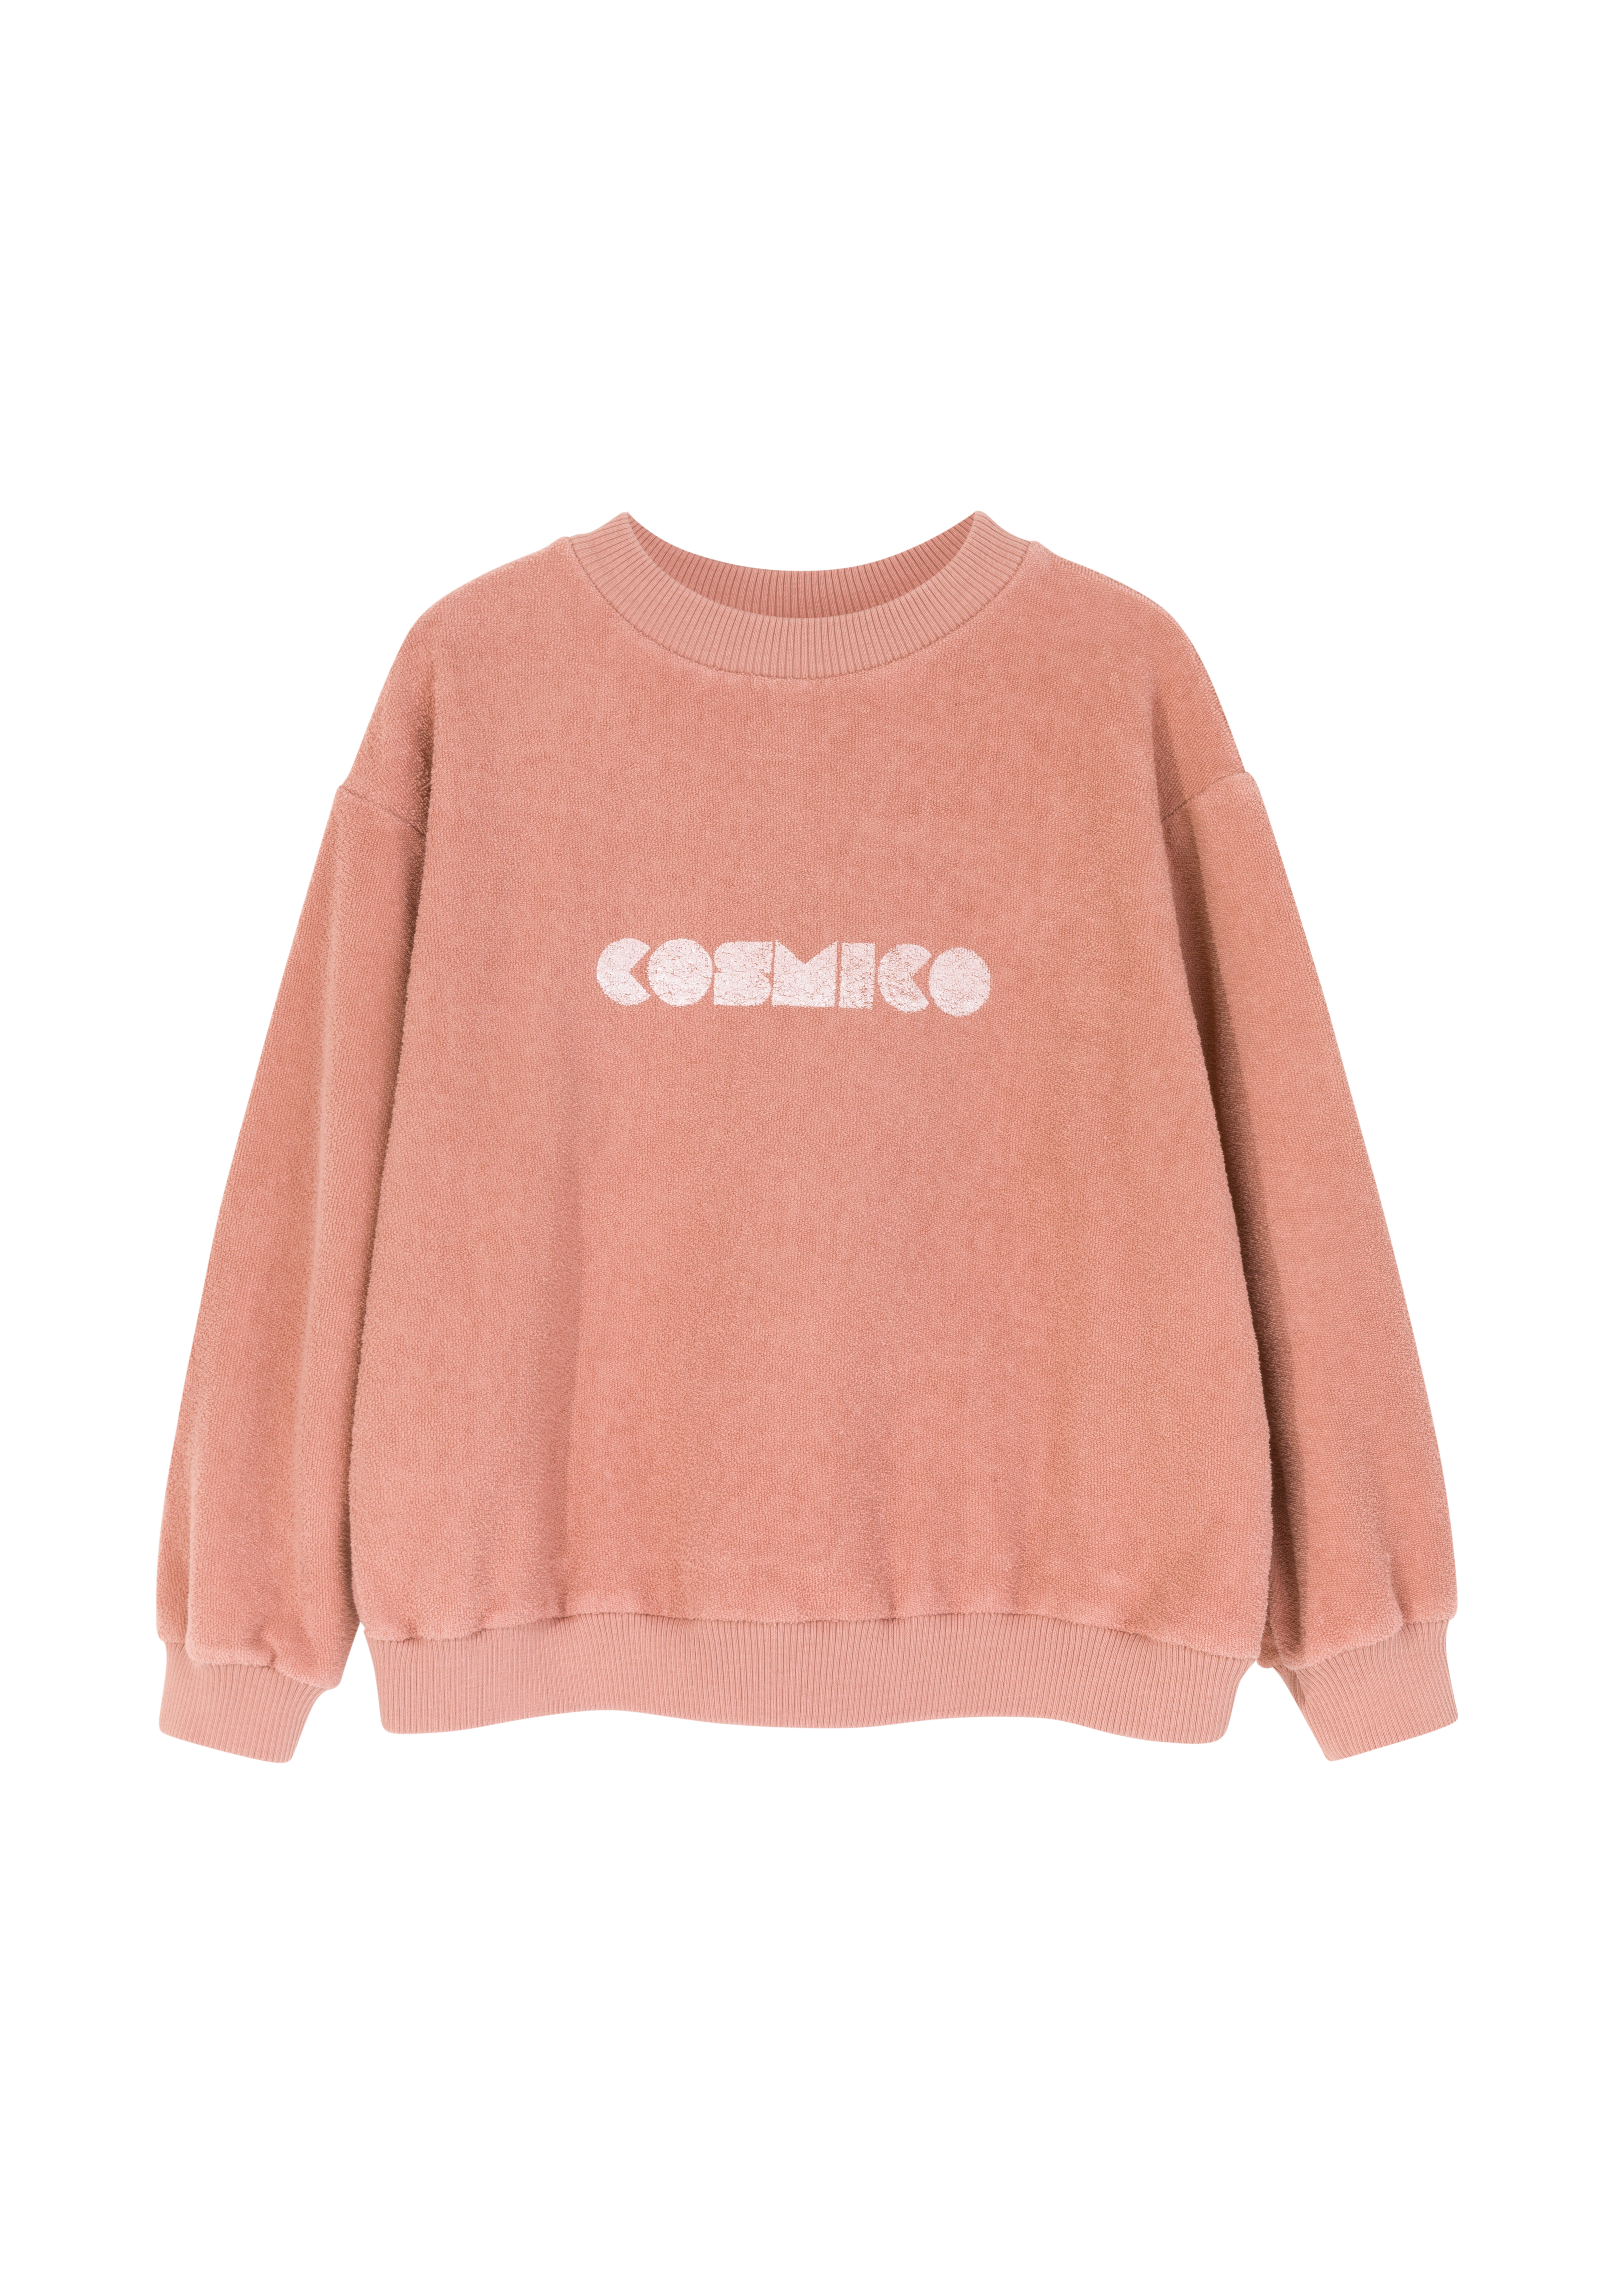 bluza frotte, dla dzieci, różowa bluza, bluza z napisem, pink sweatshirt, organic cotton sweatshirt, for kids